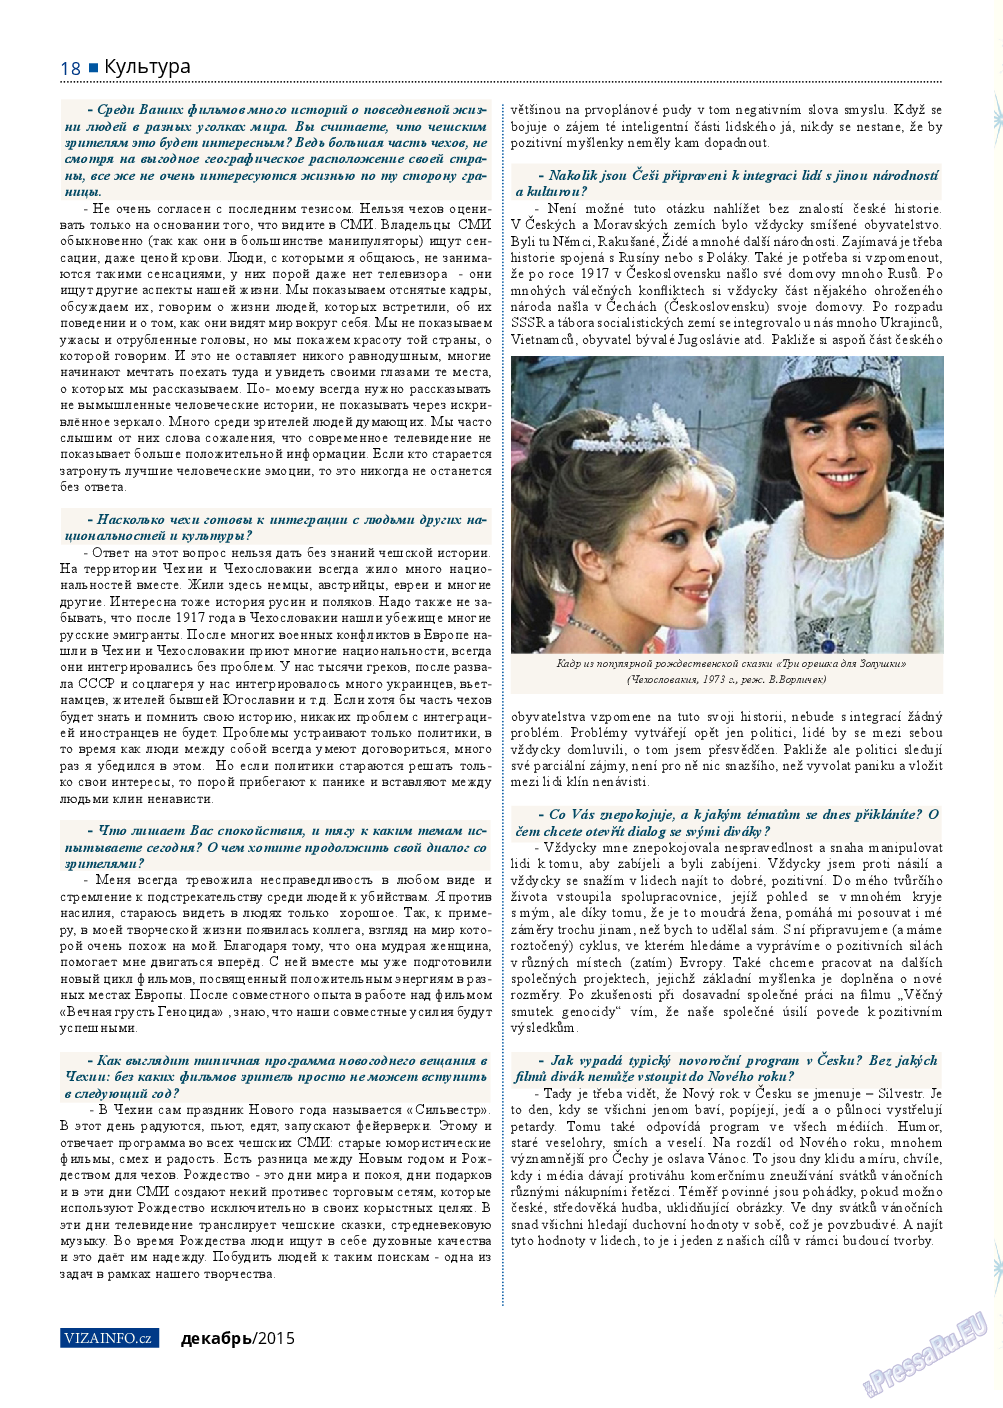 Vizainfo.cz, газета. 2015 №75 стр.18